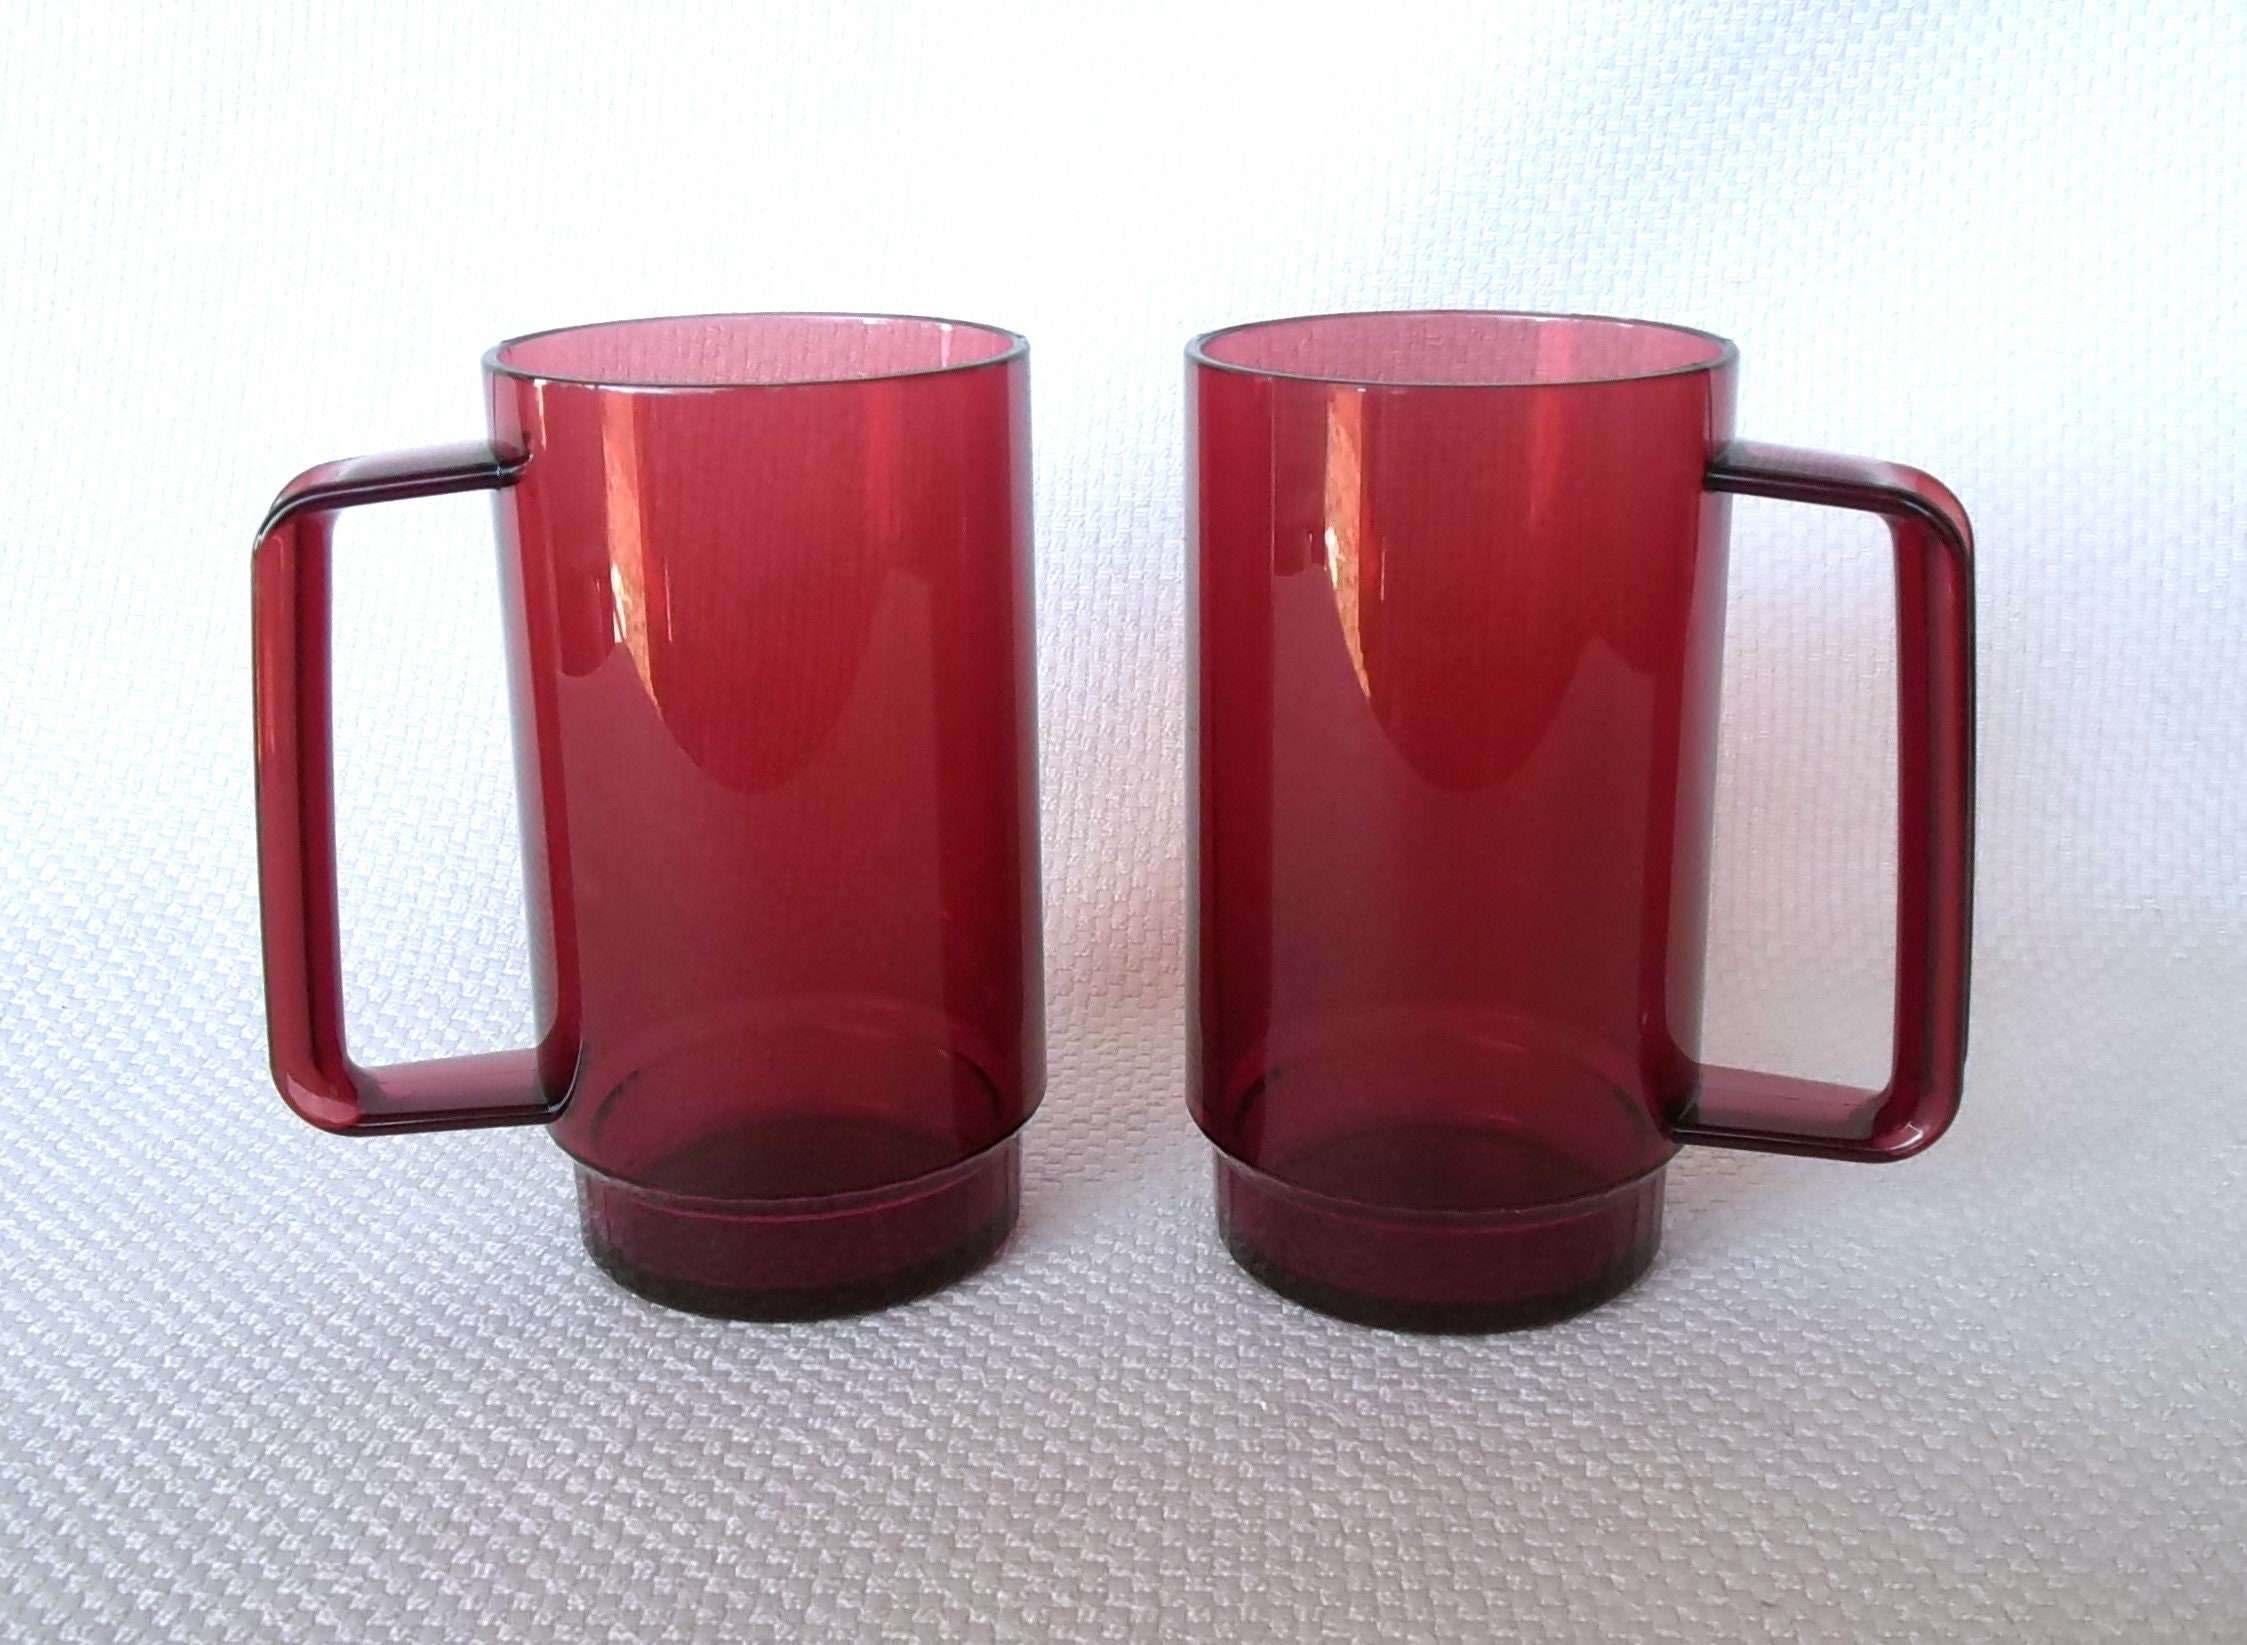 Tupperware Black Stackable Coffee Mugs 10 oz Acrylic Set of 4 NOS